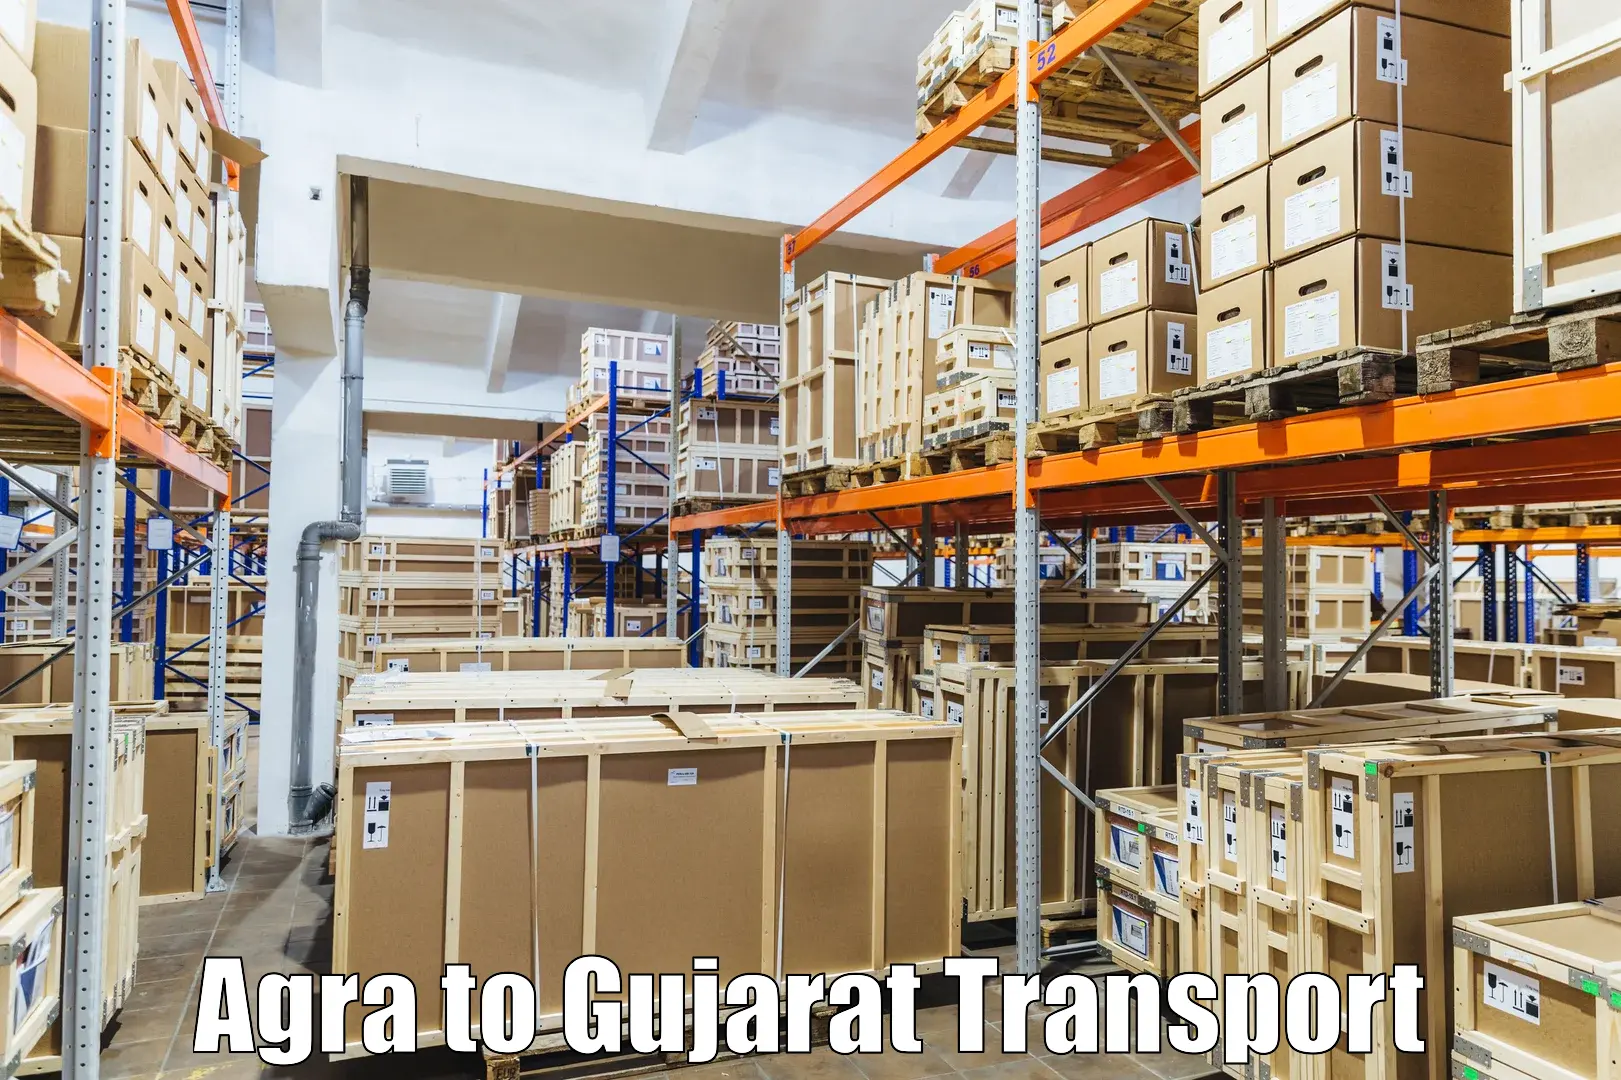 Nearby transport service Agra to Dwarka